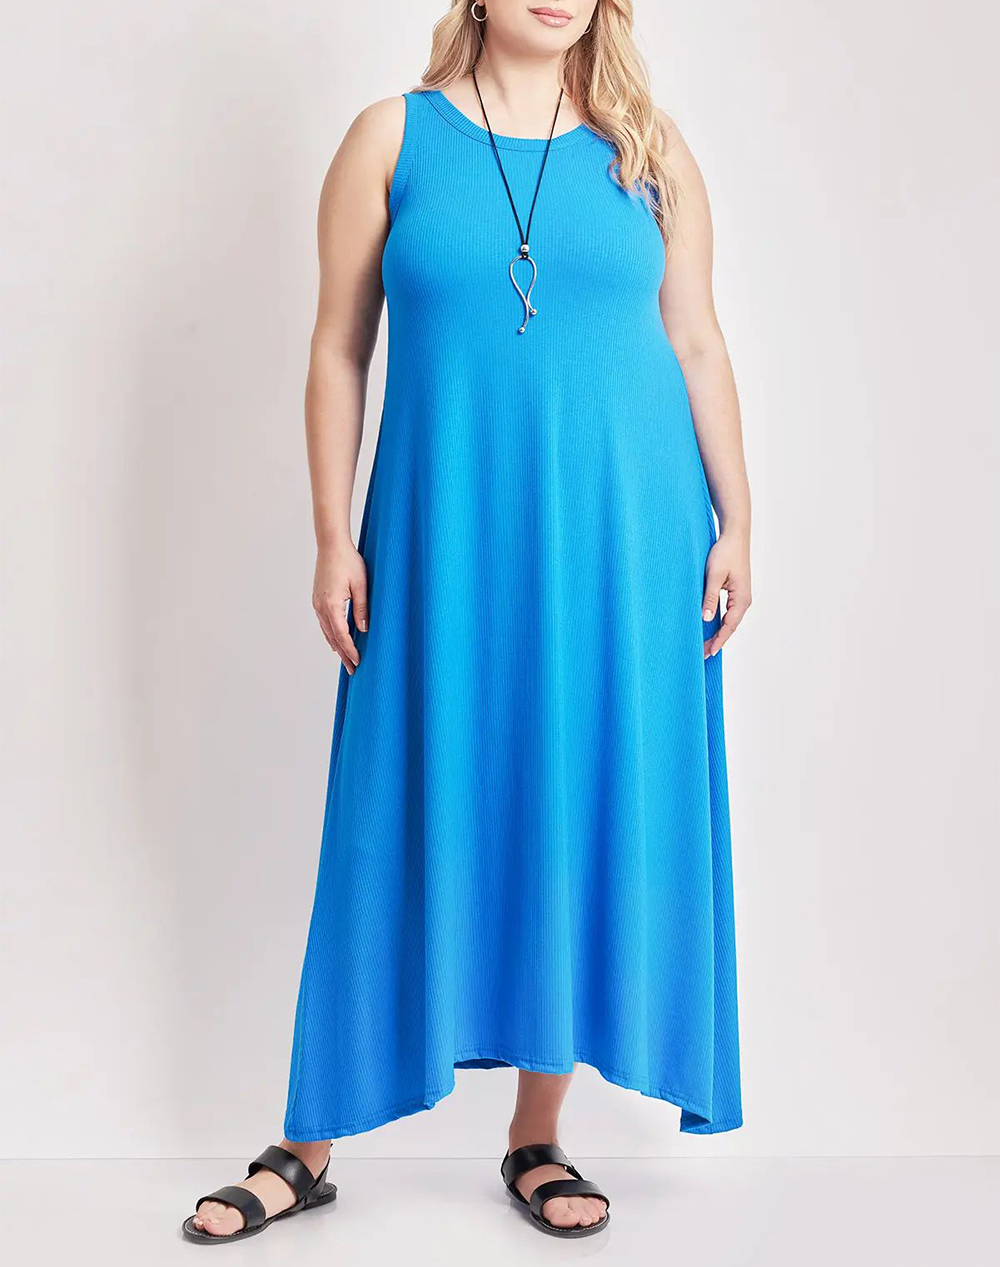 PARABITA Αμάνικο ριπ φόρεμα 012410605918-012 Turquoise